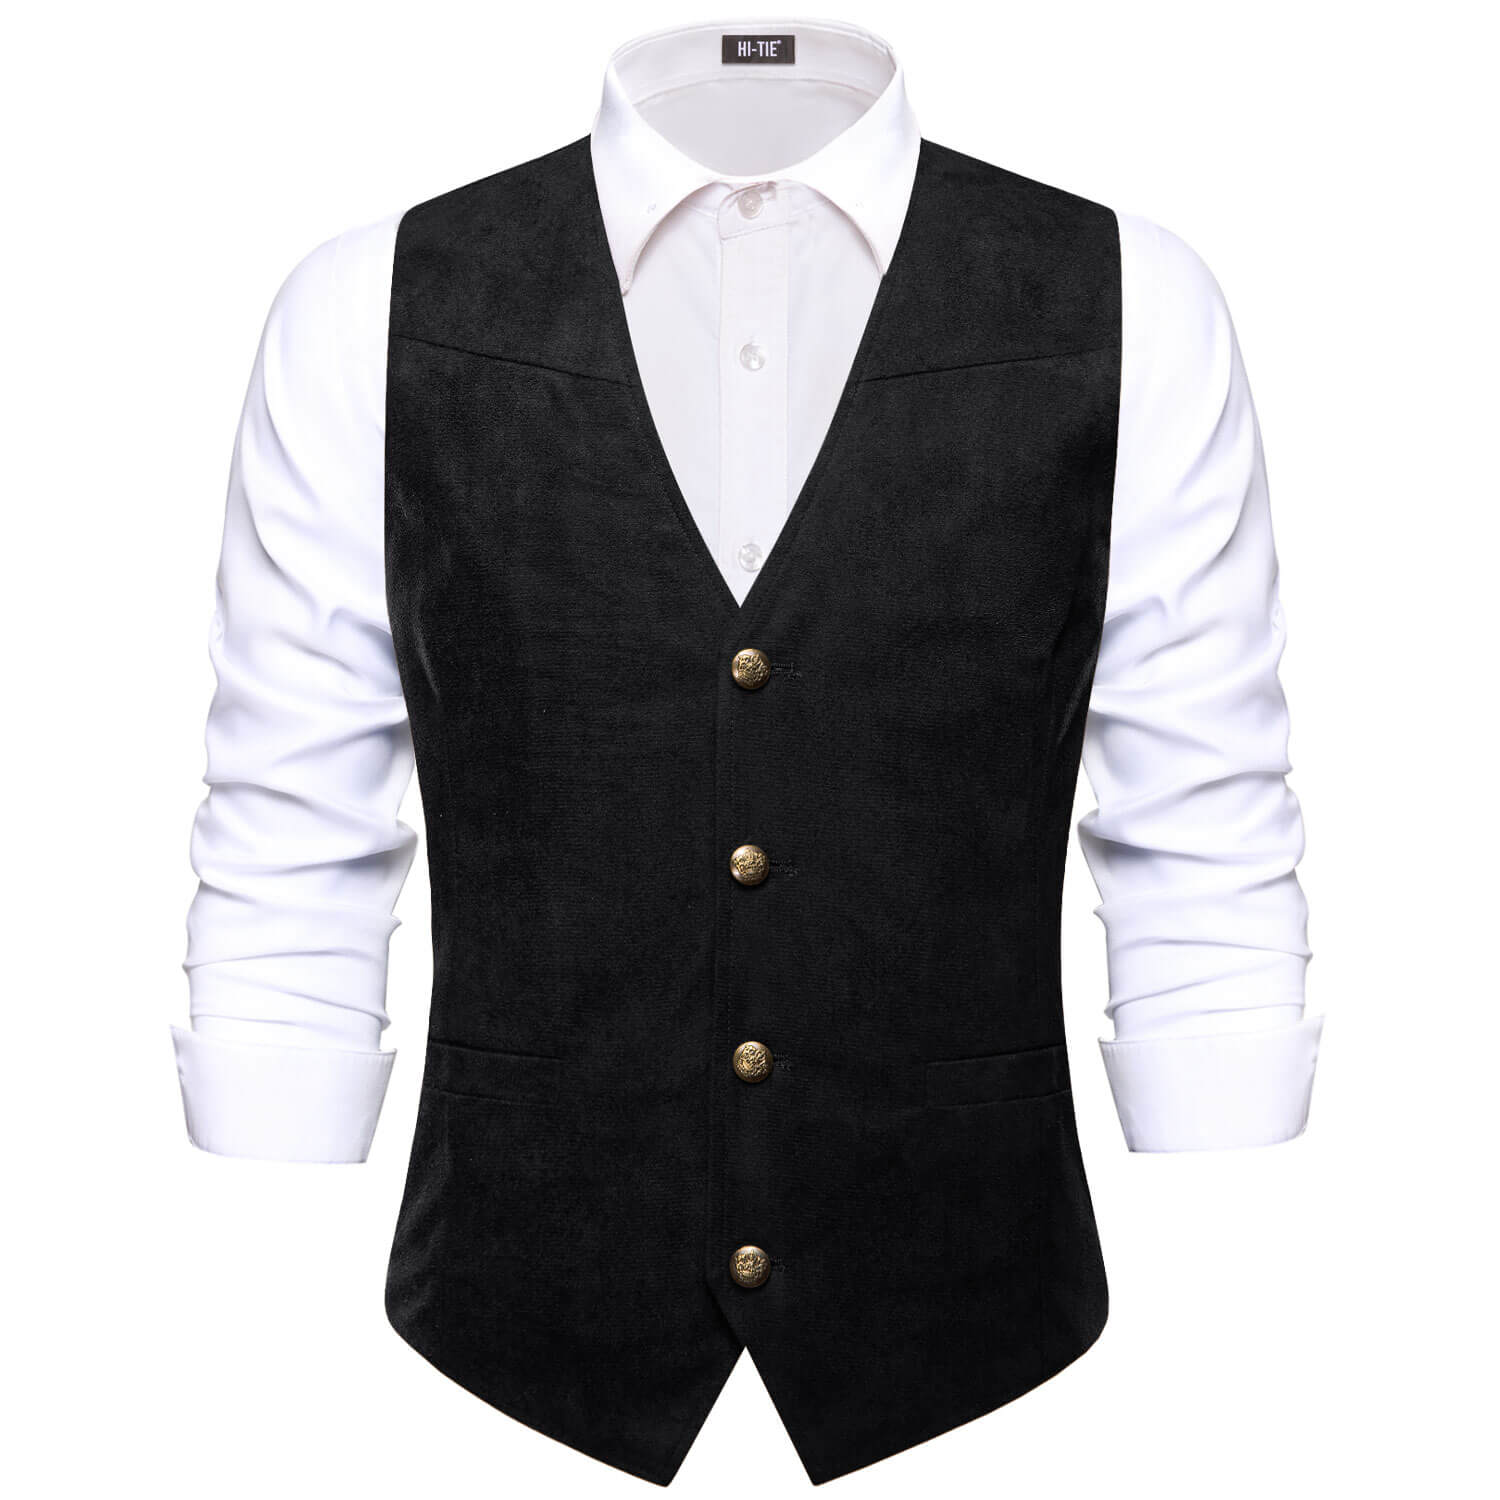  Black Suede Waistcoat Solid Single Vest